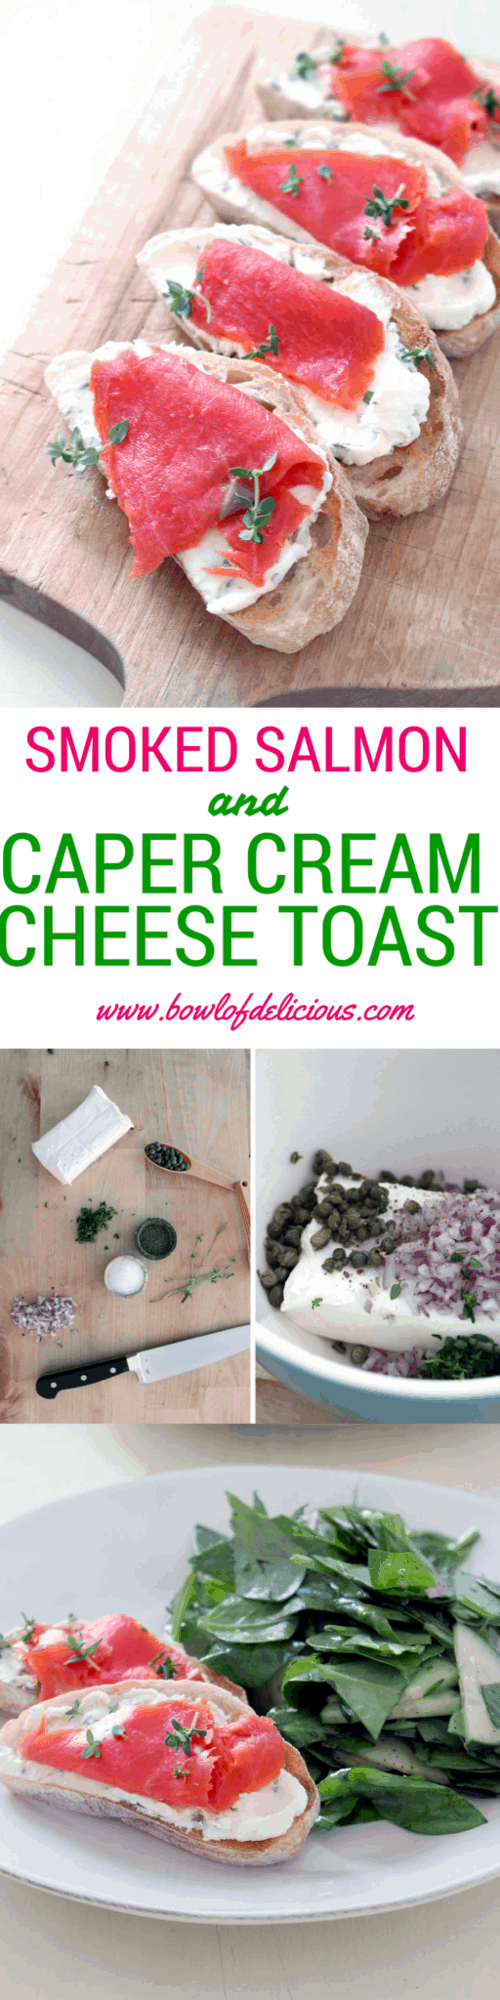 smoked salmon and caper cream cheese toast